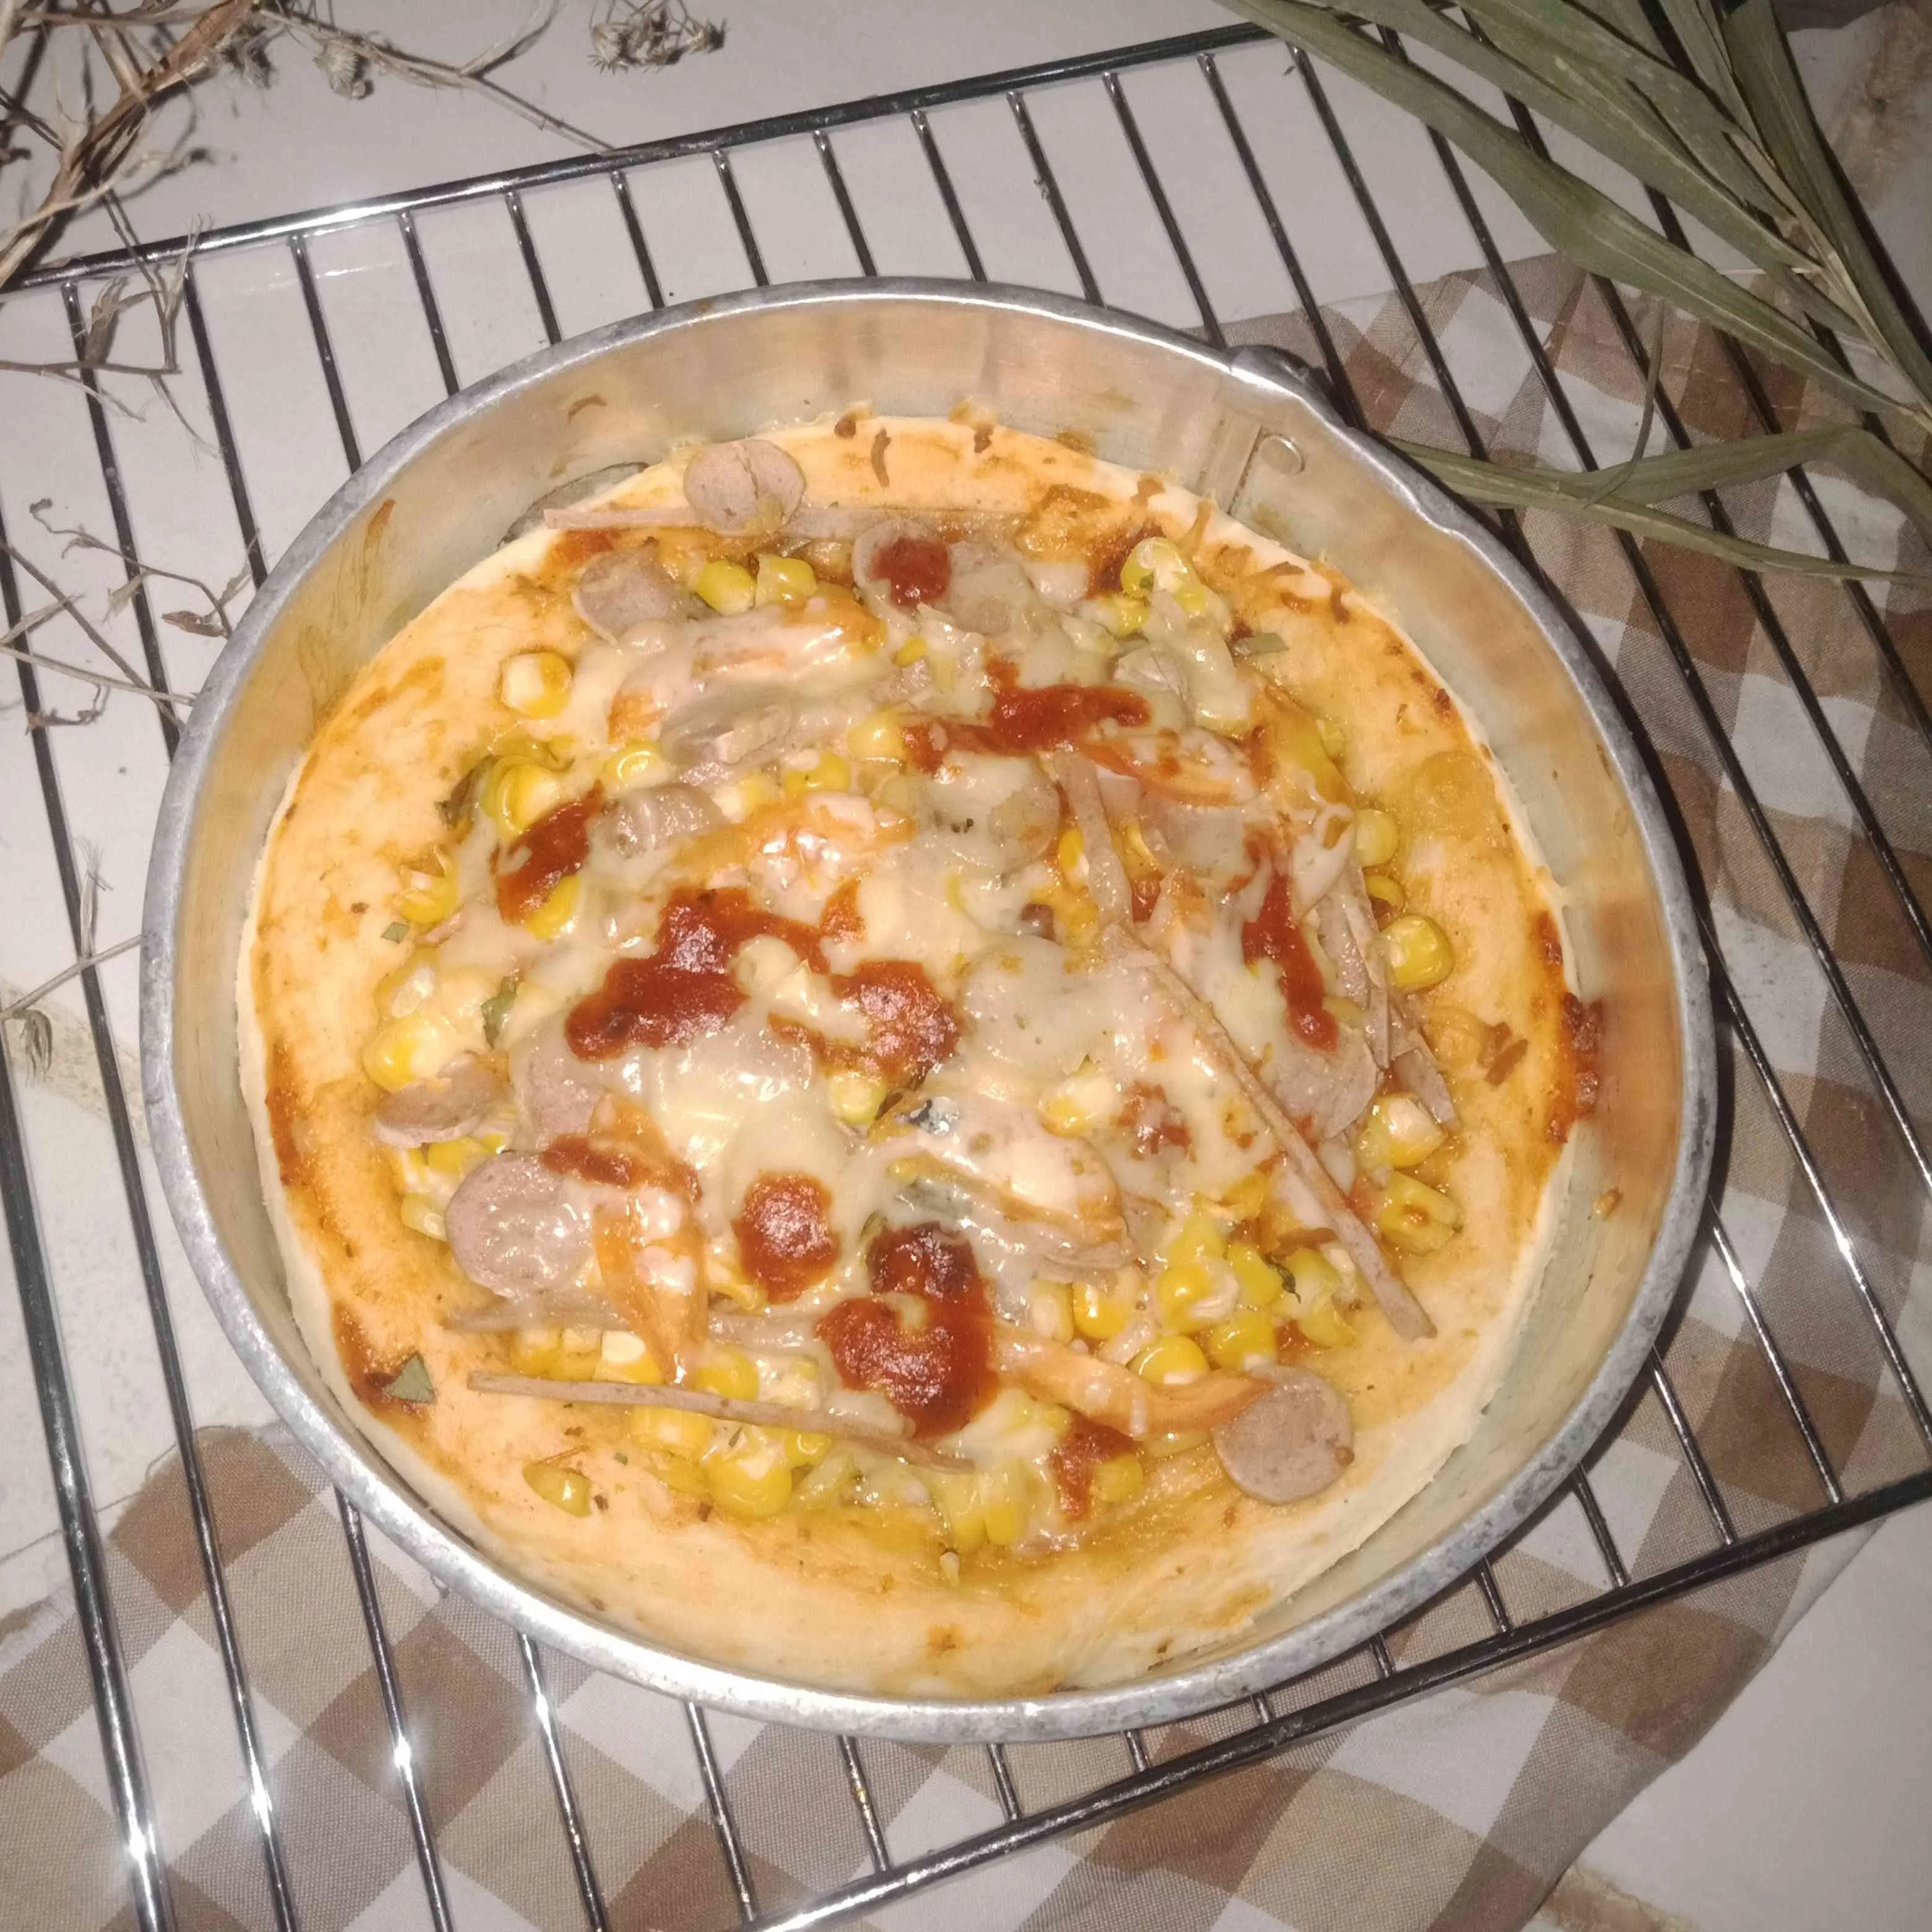 Pizza Jagung